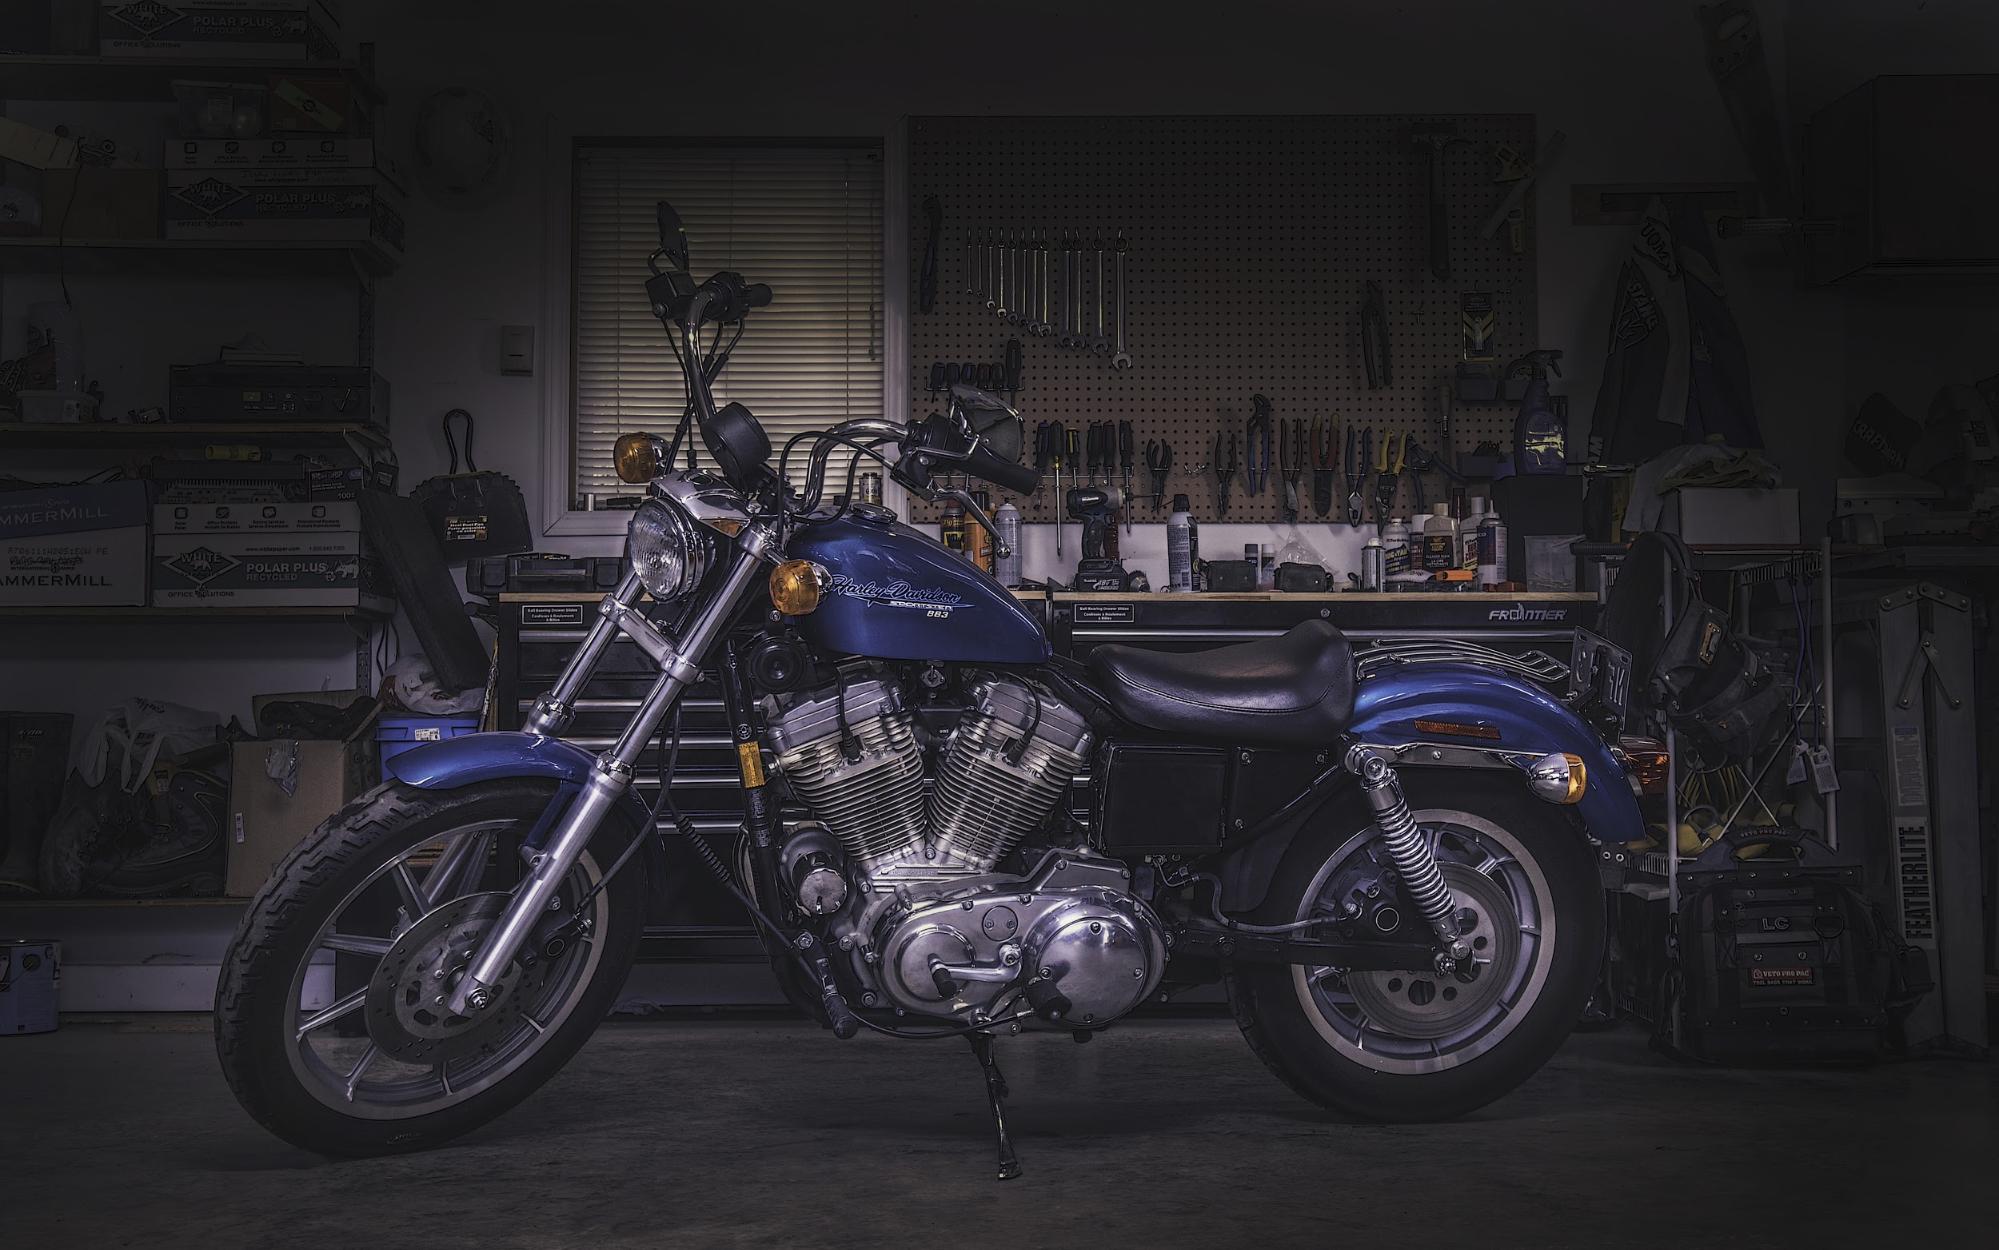 Harley Davidson Sportster 883 Beginner Bike Profile Owner Reviews